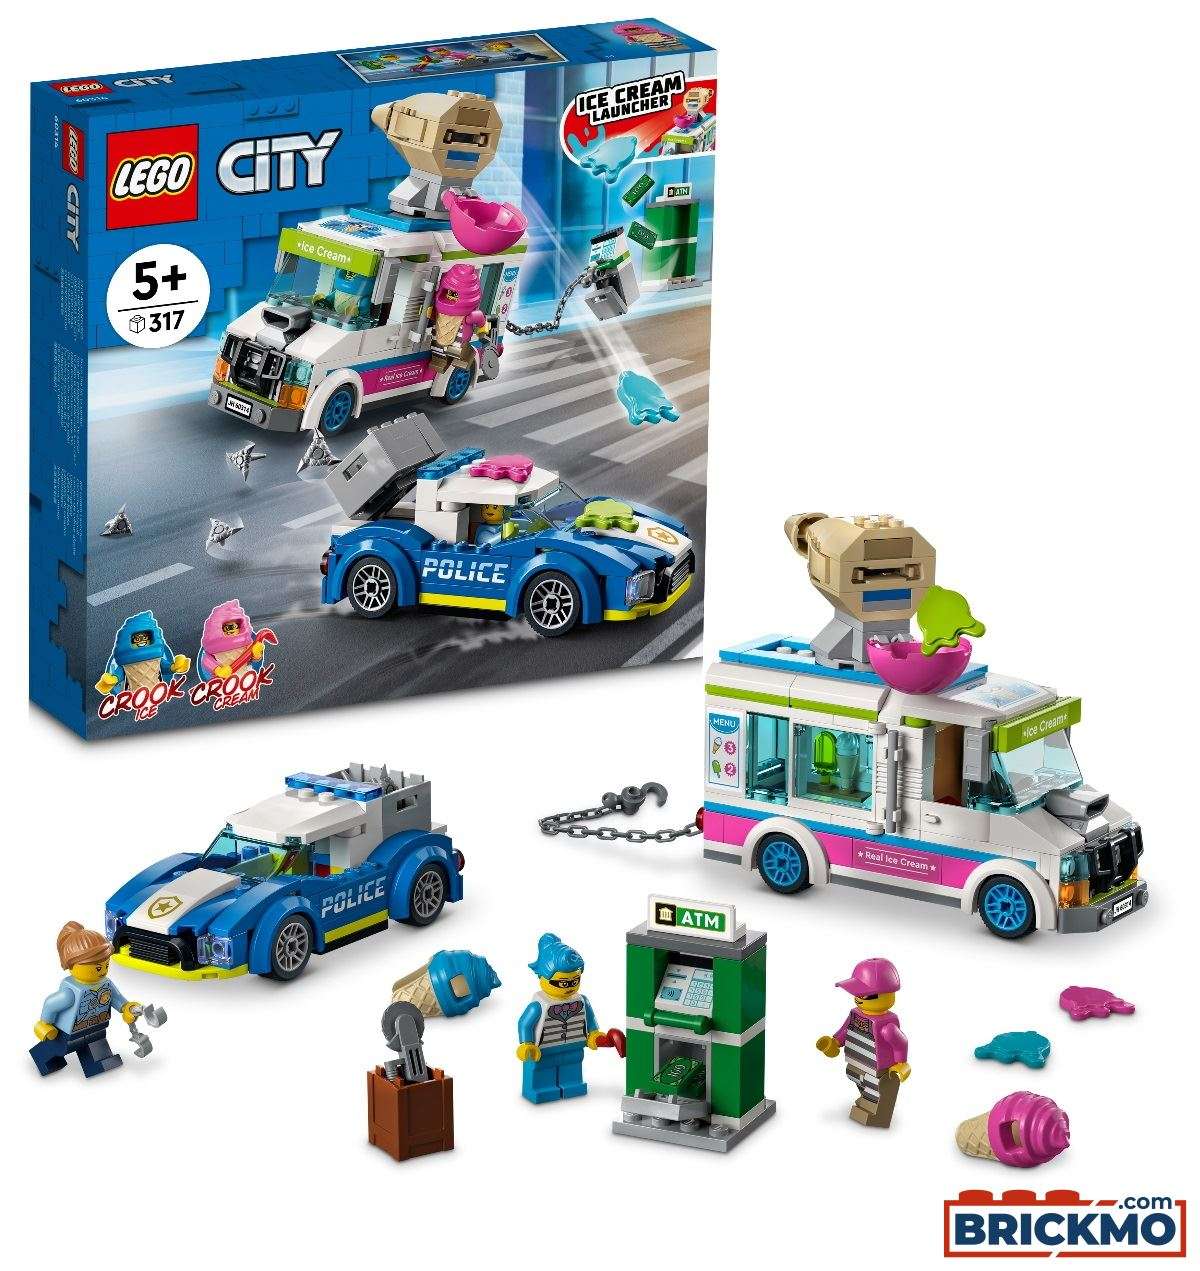 Eiswagen-Verfolgungsjagd | 60314 60314 LEGO Your TRUCKMO Truck – Models Models spezialist City Truck